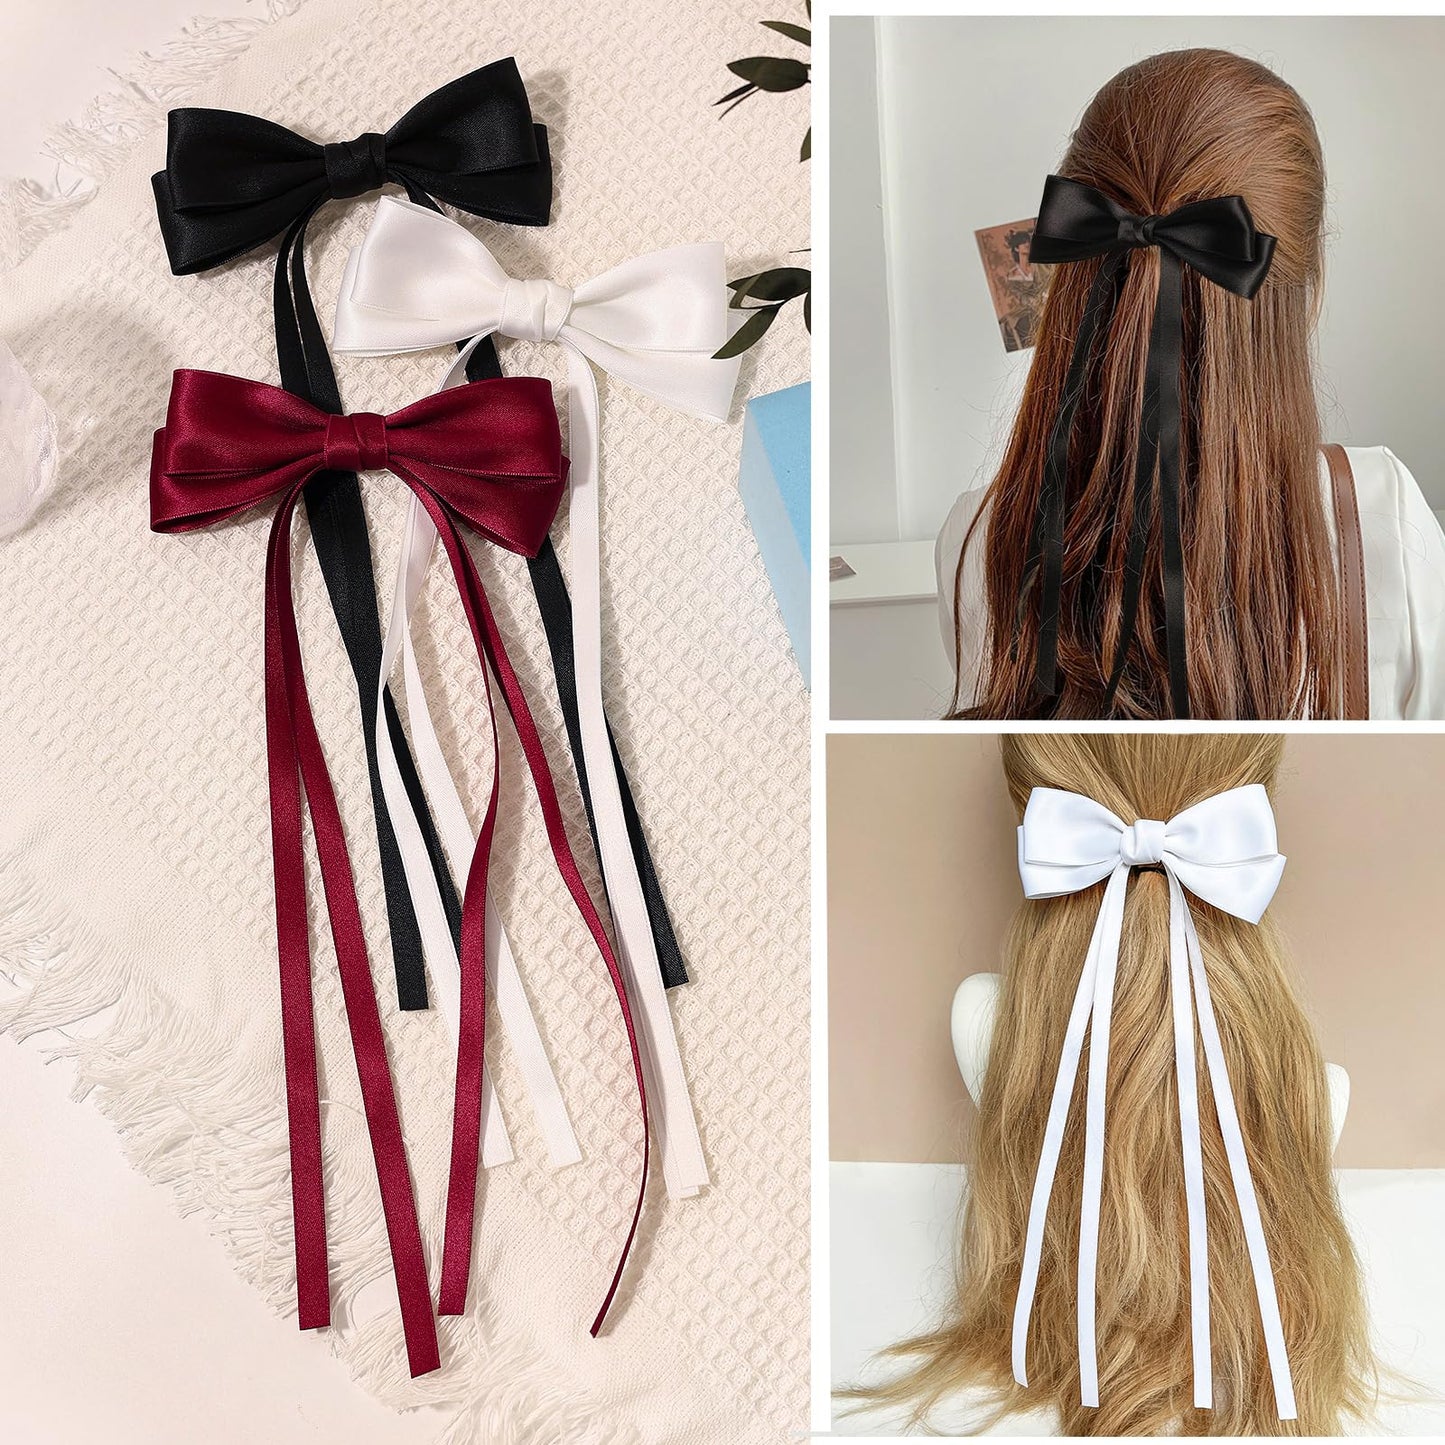 XFYUZR 3PCS Hair Bow for Women, Silky Satin Bows Metal Clip, Ribbon Hair Clips Bowknot With Long Tail, Tassle Bows Hair Barrettes Hair Accessories for Women Girls (black white burgundy)